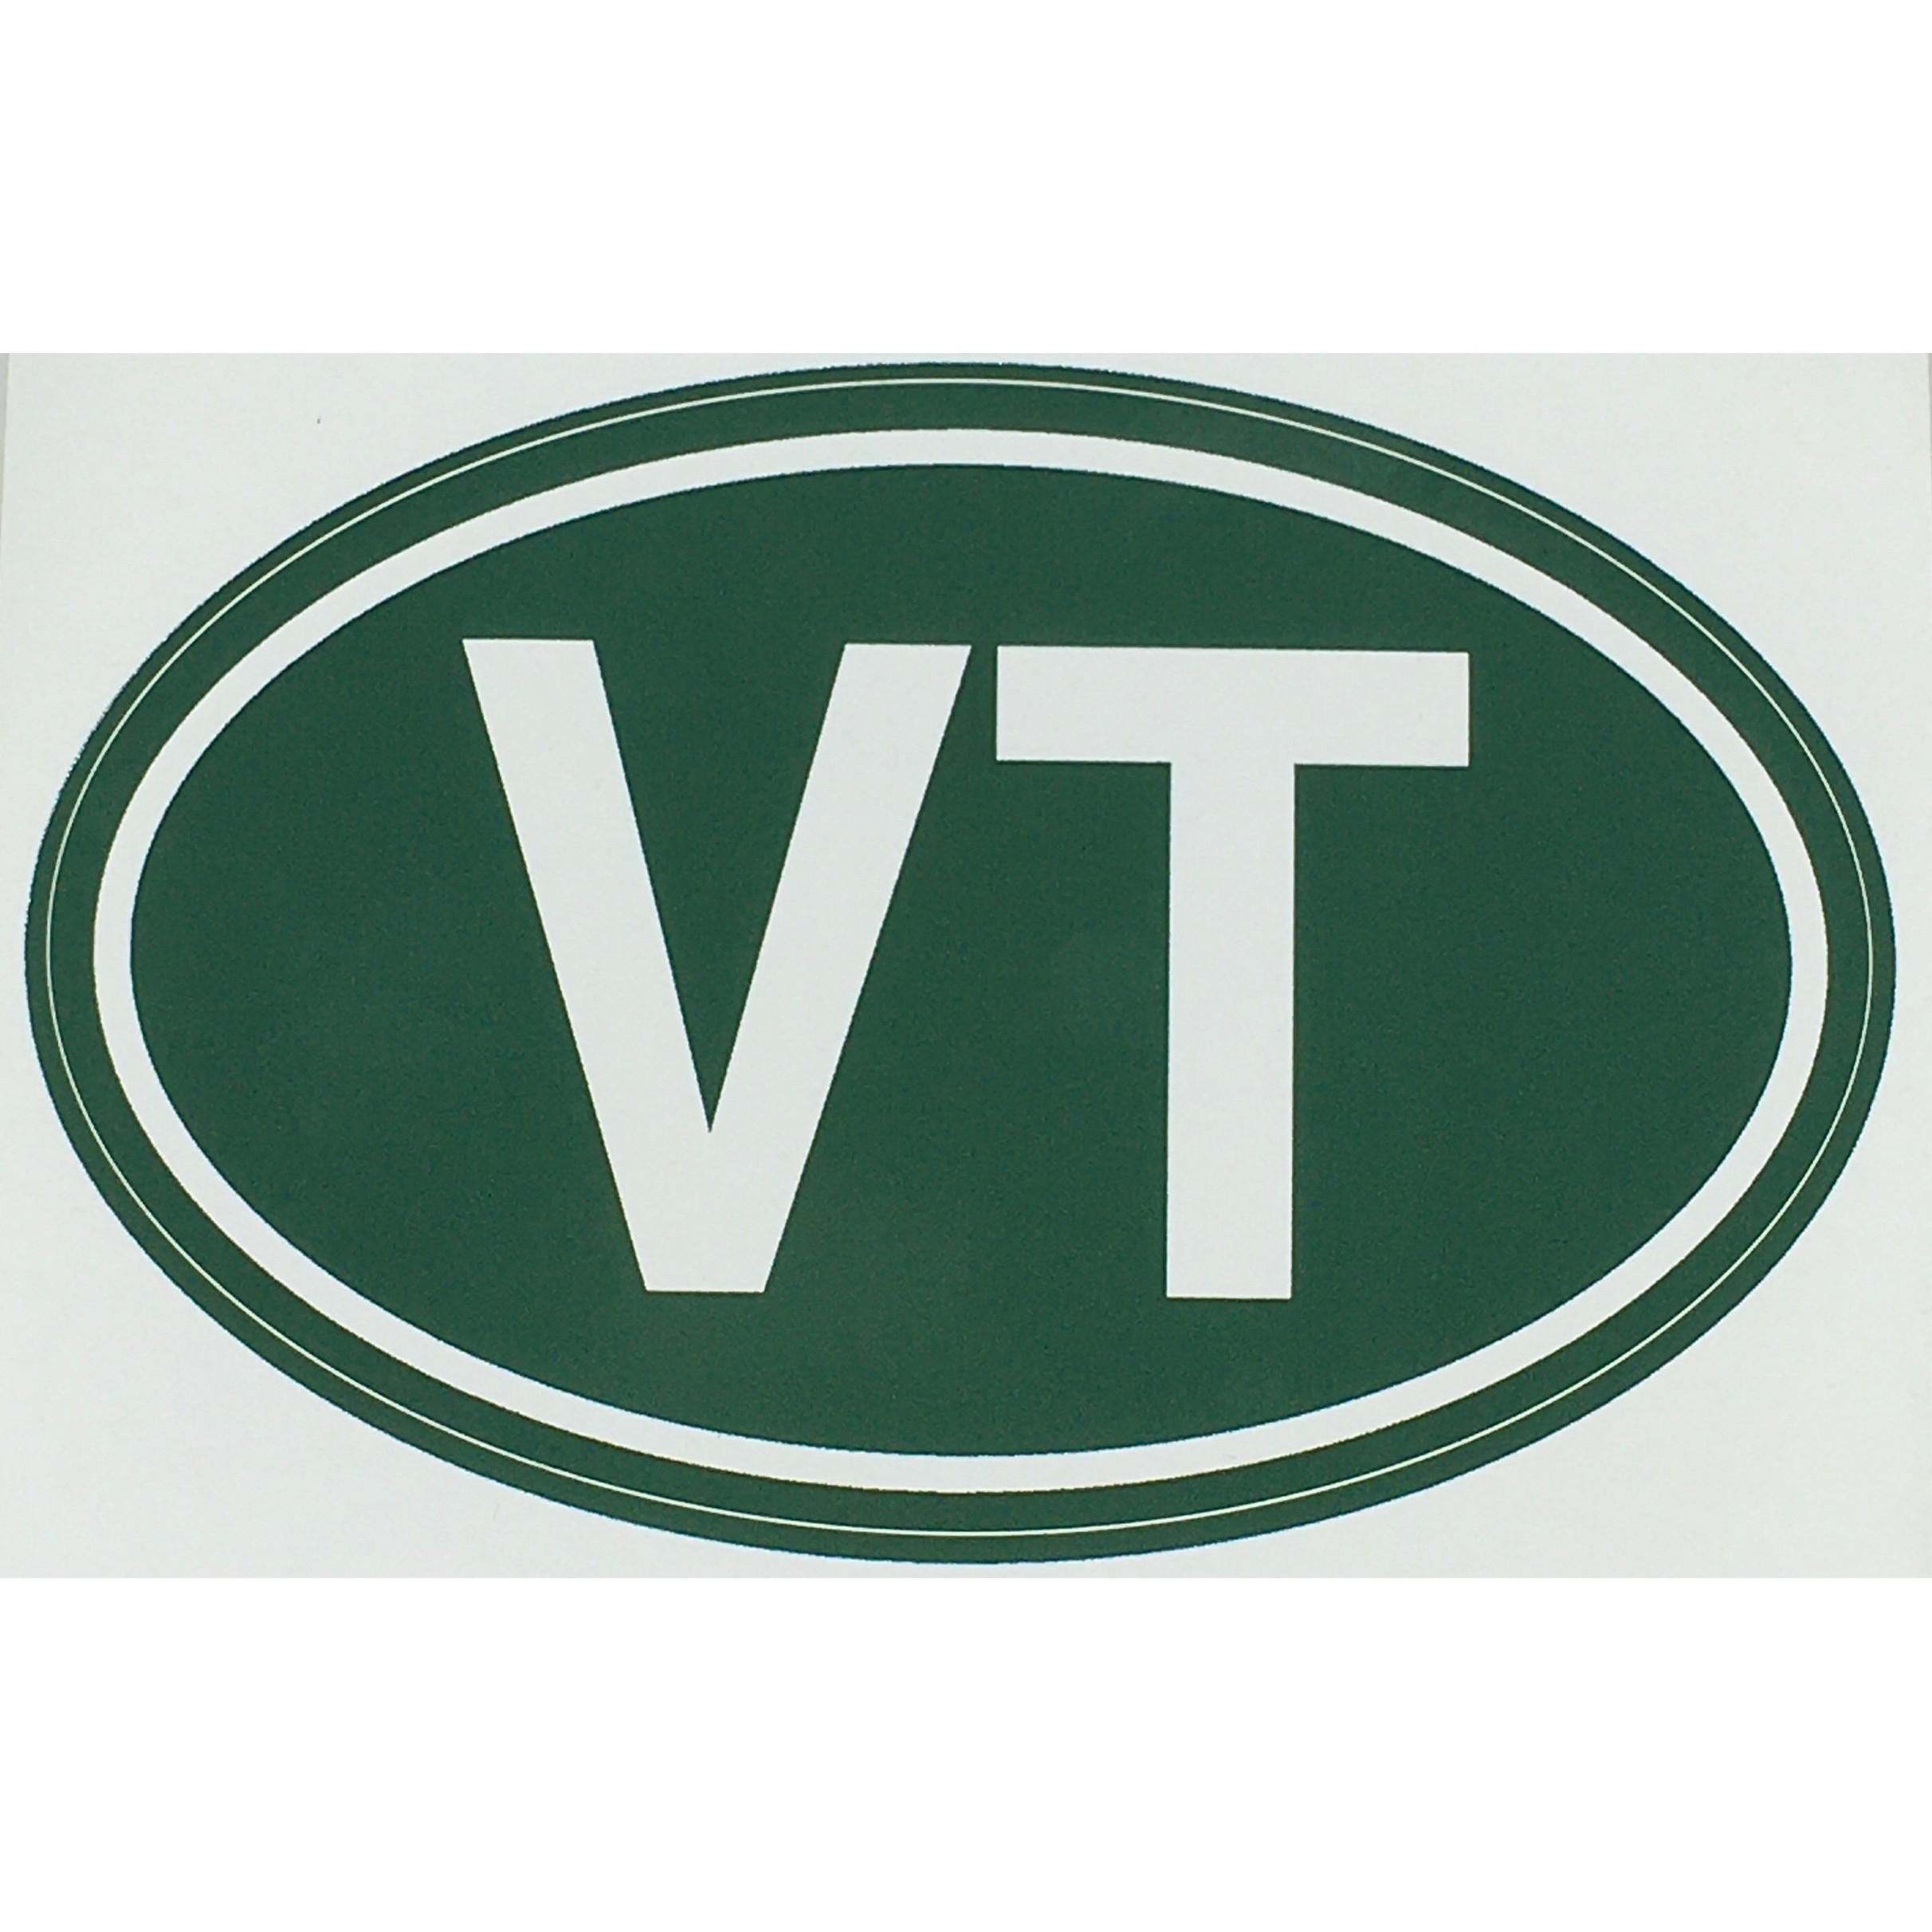 VT Euro Sticker (Green)